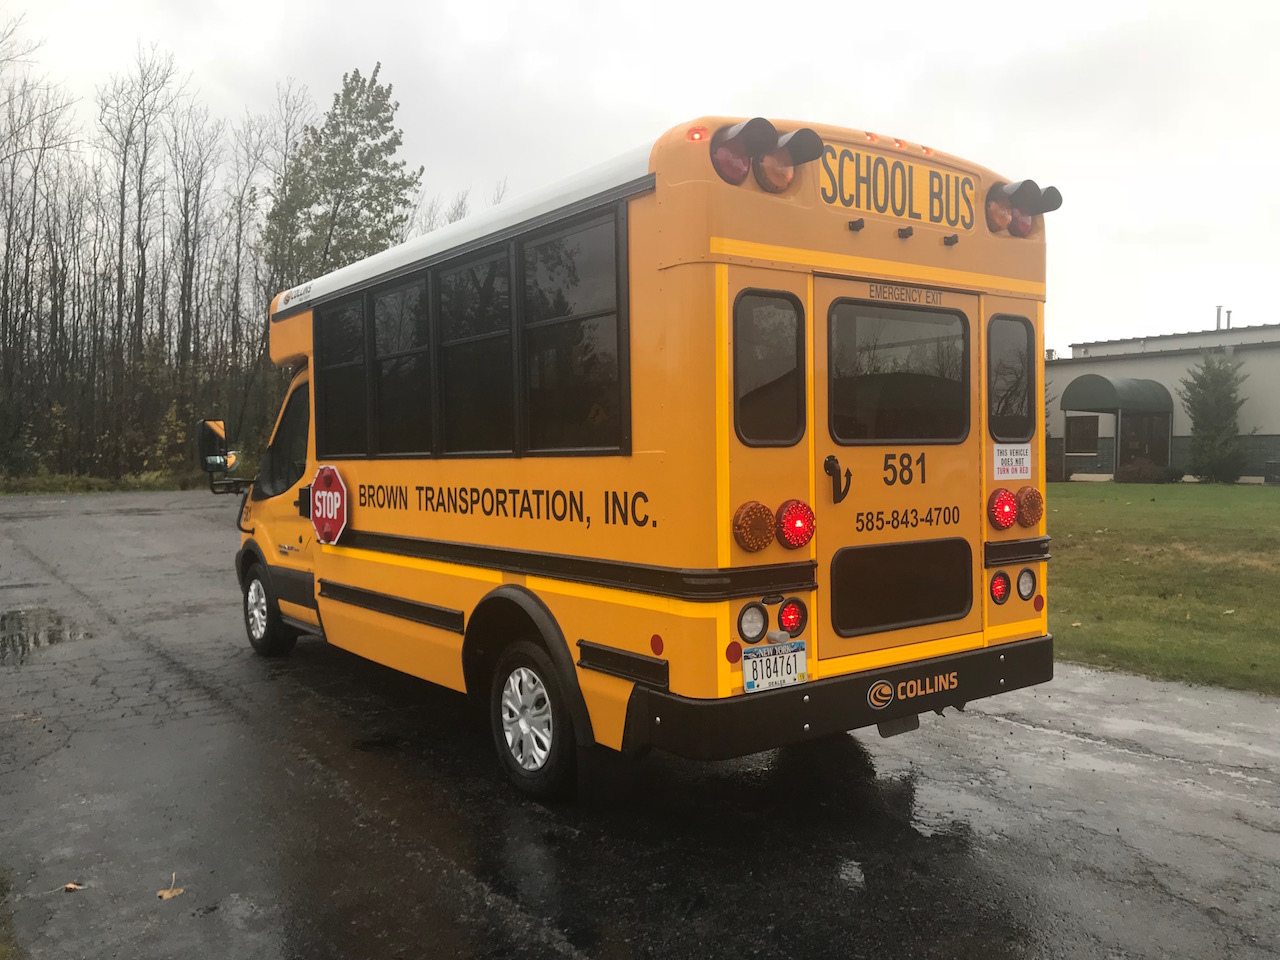 Collins School Buses to Brown Transportation - 5 units - Gorman Enterprises